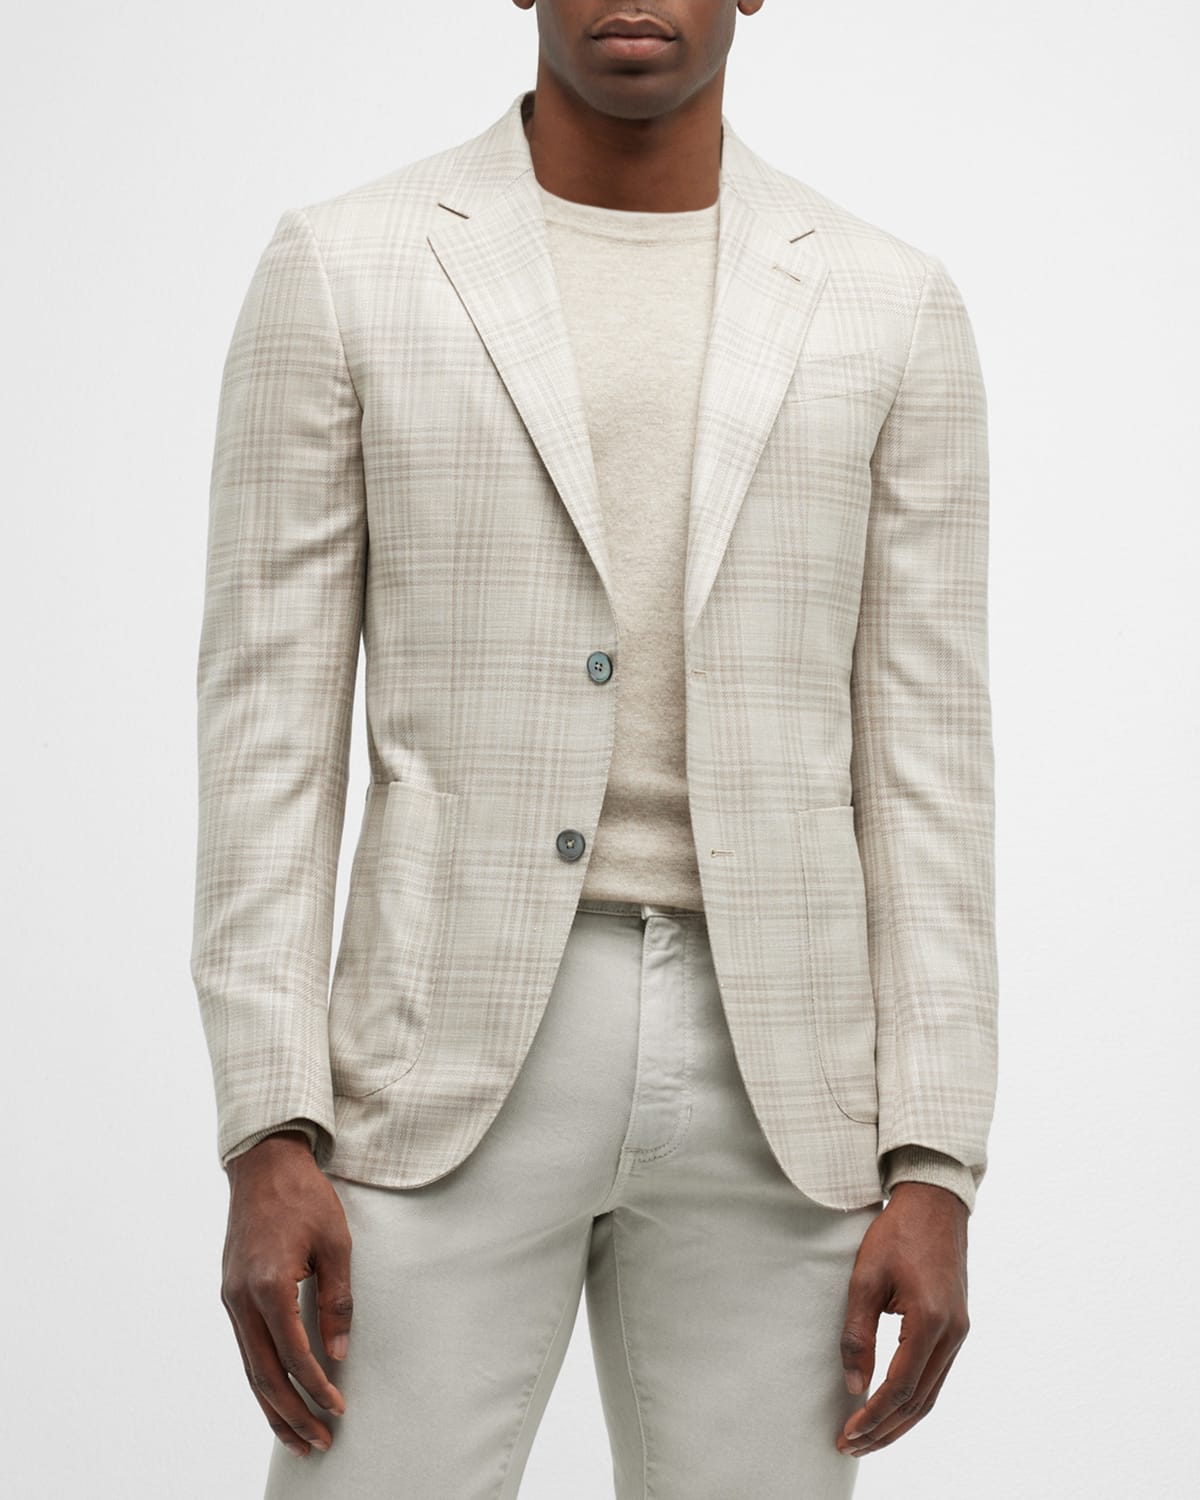 ZEGNA Men's Plaid Wool-Blend Sport Coat | Neiman Marcus